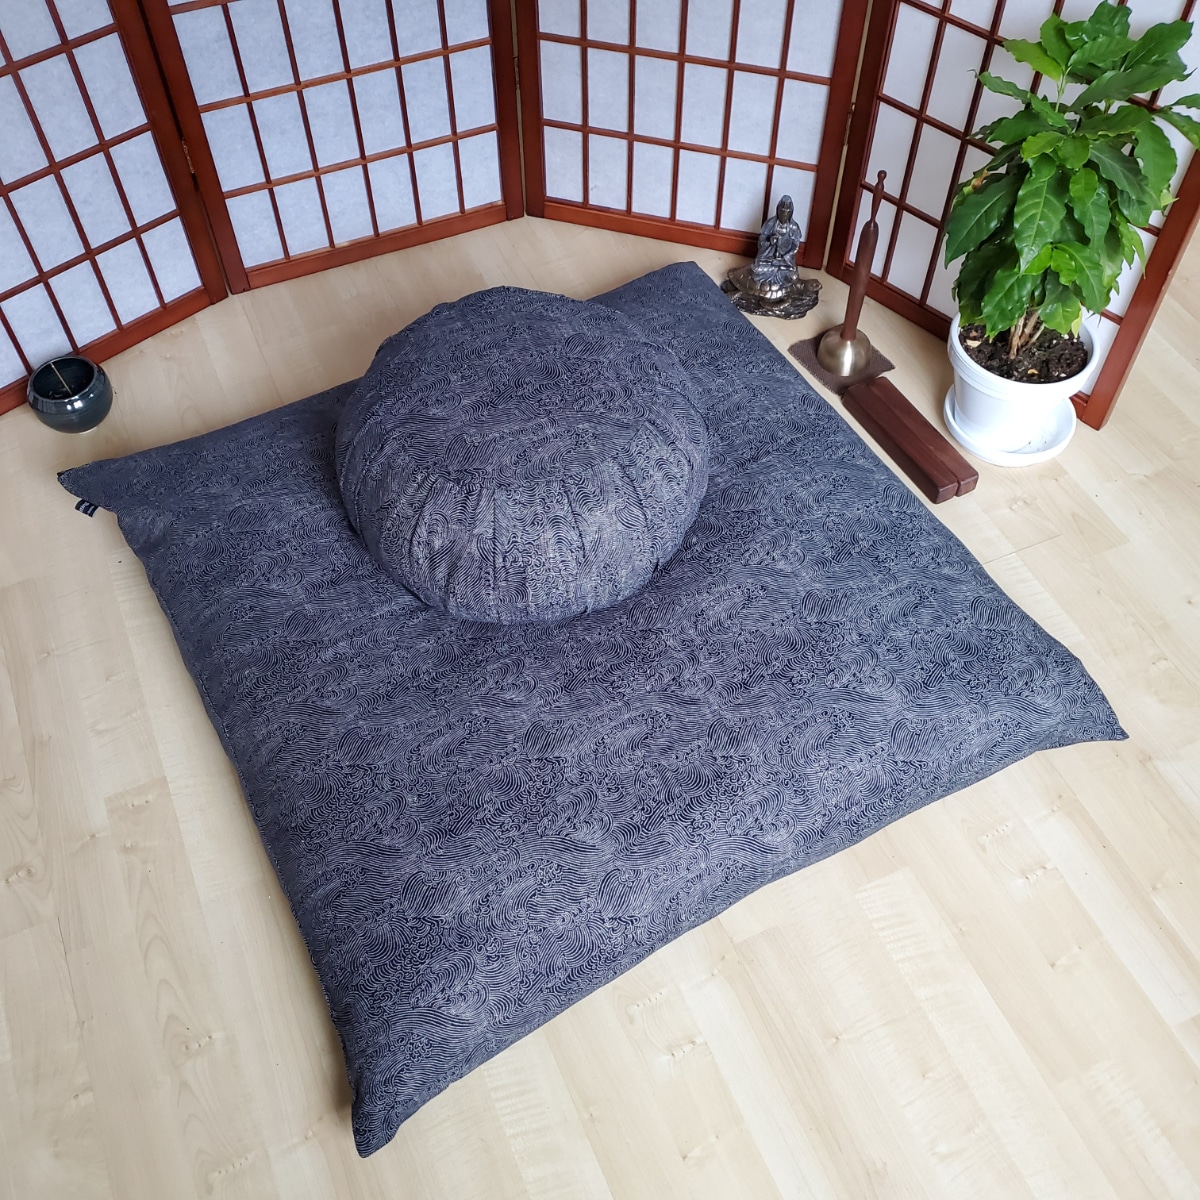 Deluxe Lotus Japanese Zafu & Zabuton Yoga Meditation Cushion